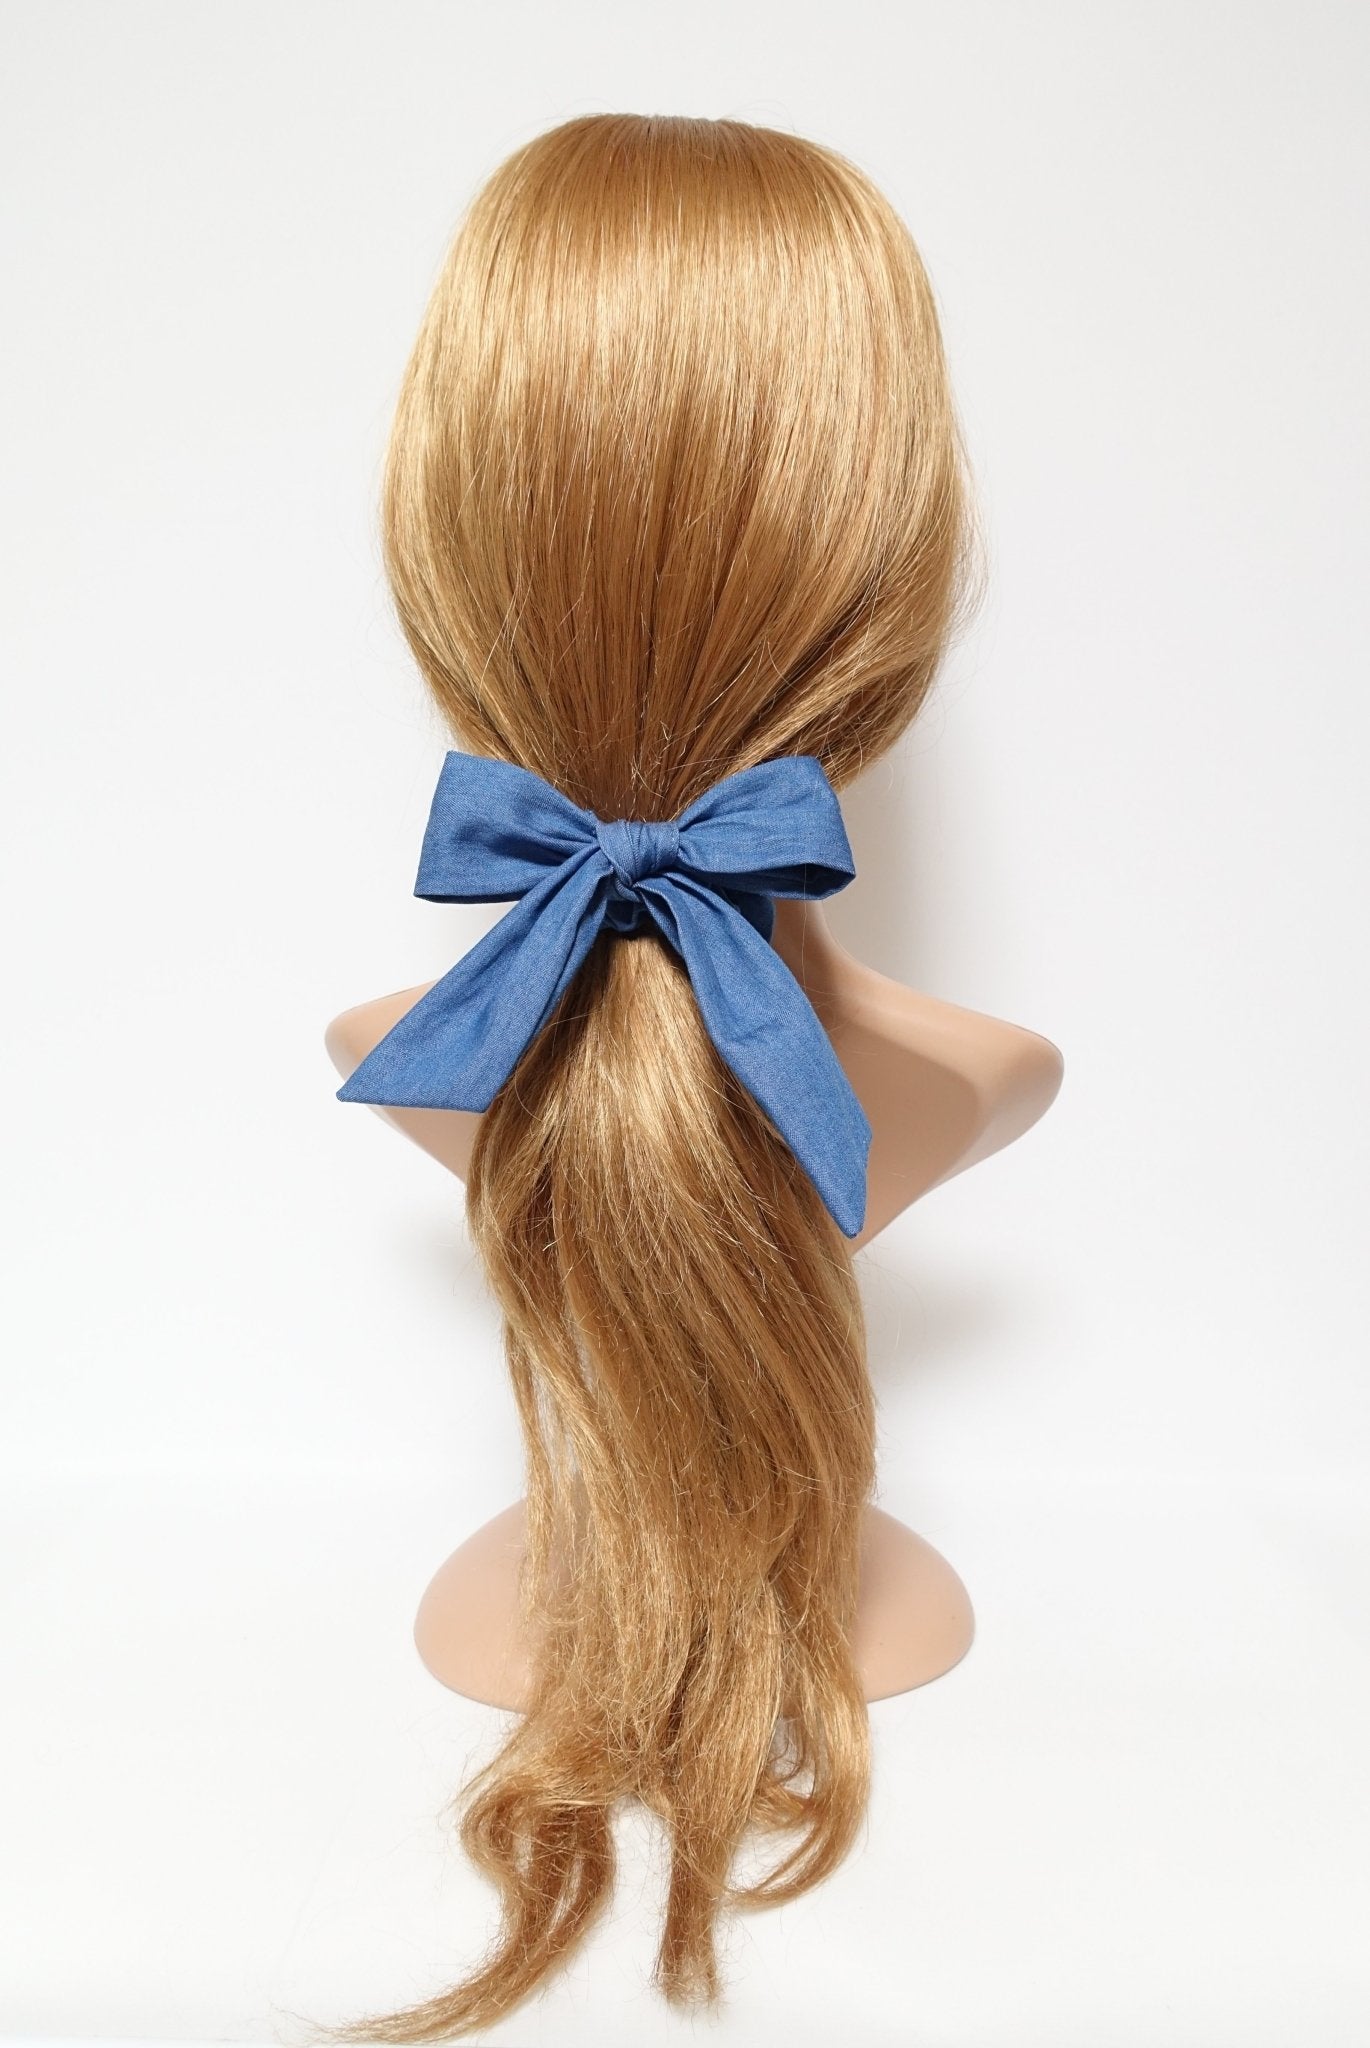 veryshine.com scrunchies/hair holder denim bow knot scrunchies cotton casual scrunchy woman hair elastic